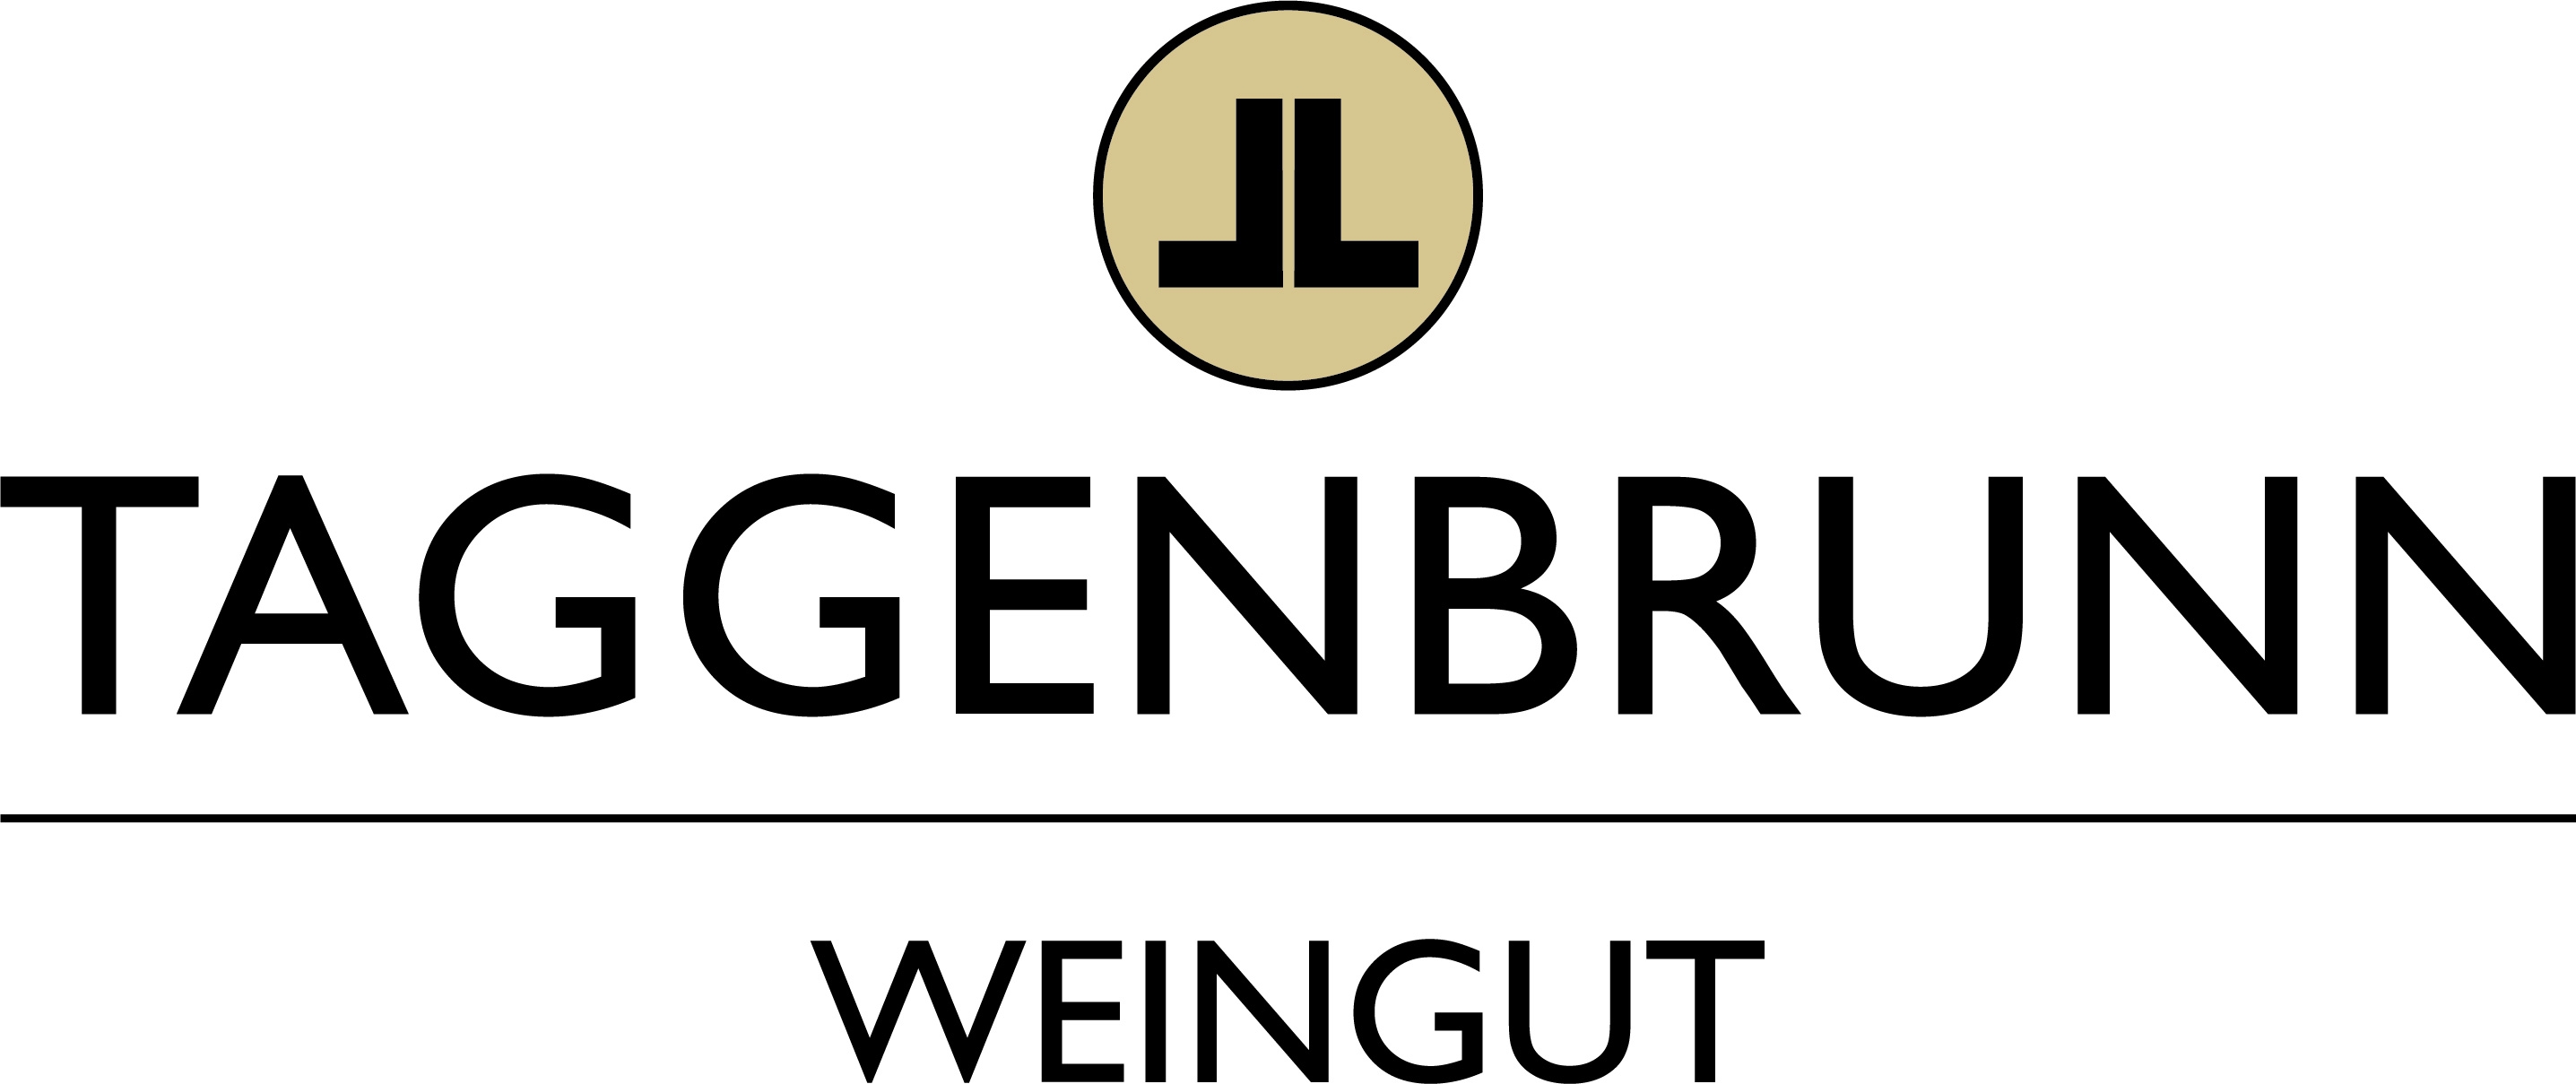 Weingut Burg Taggenbrunn GmbH